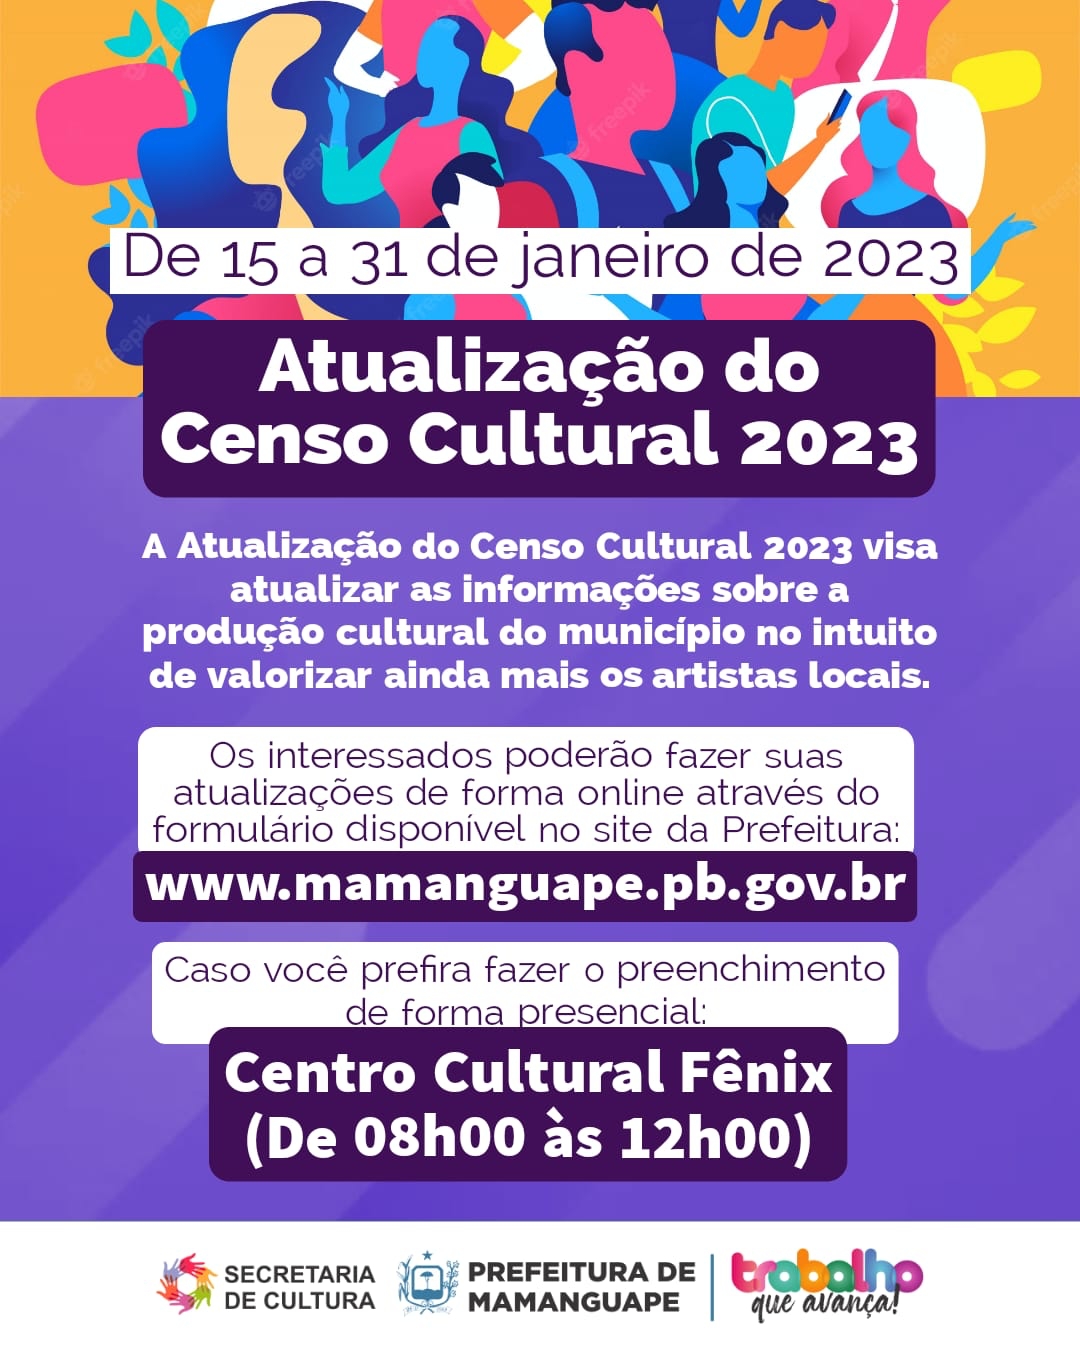 Censo Cultural – Secretaria de Cultura de Mamanguape está realizando recadastramento cultural no município